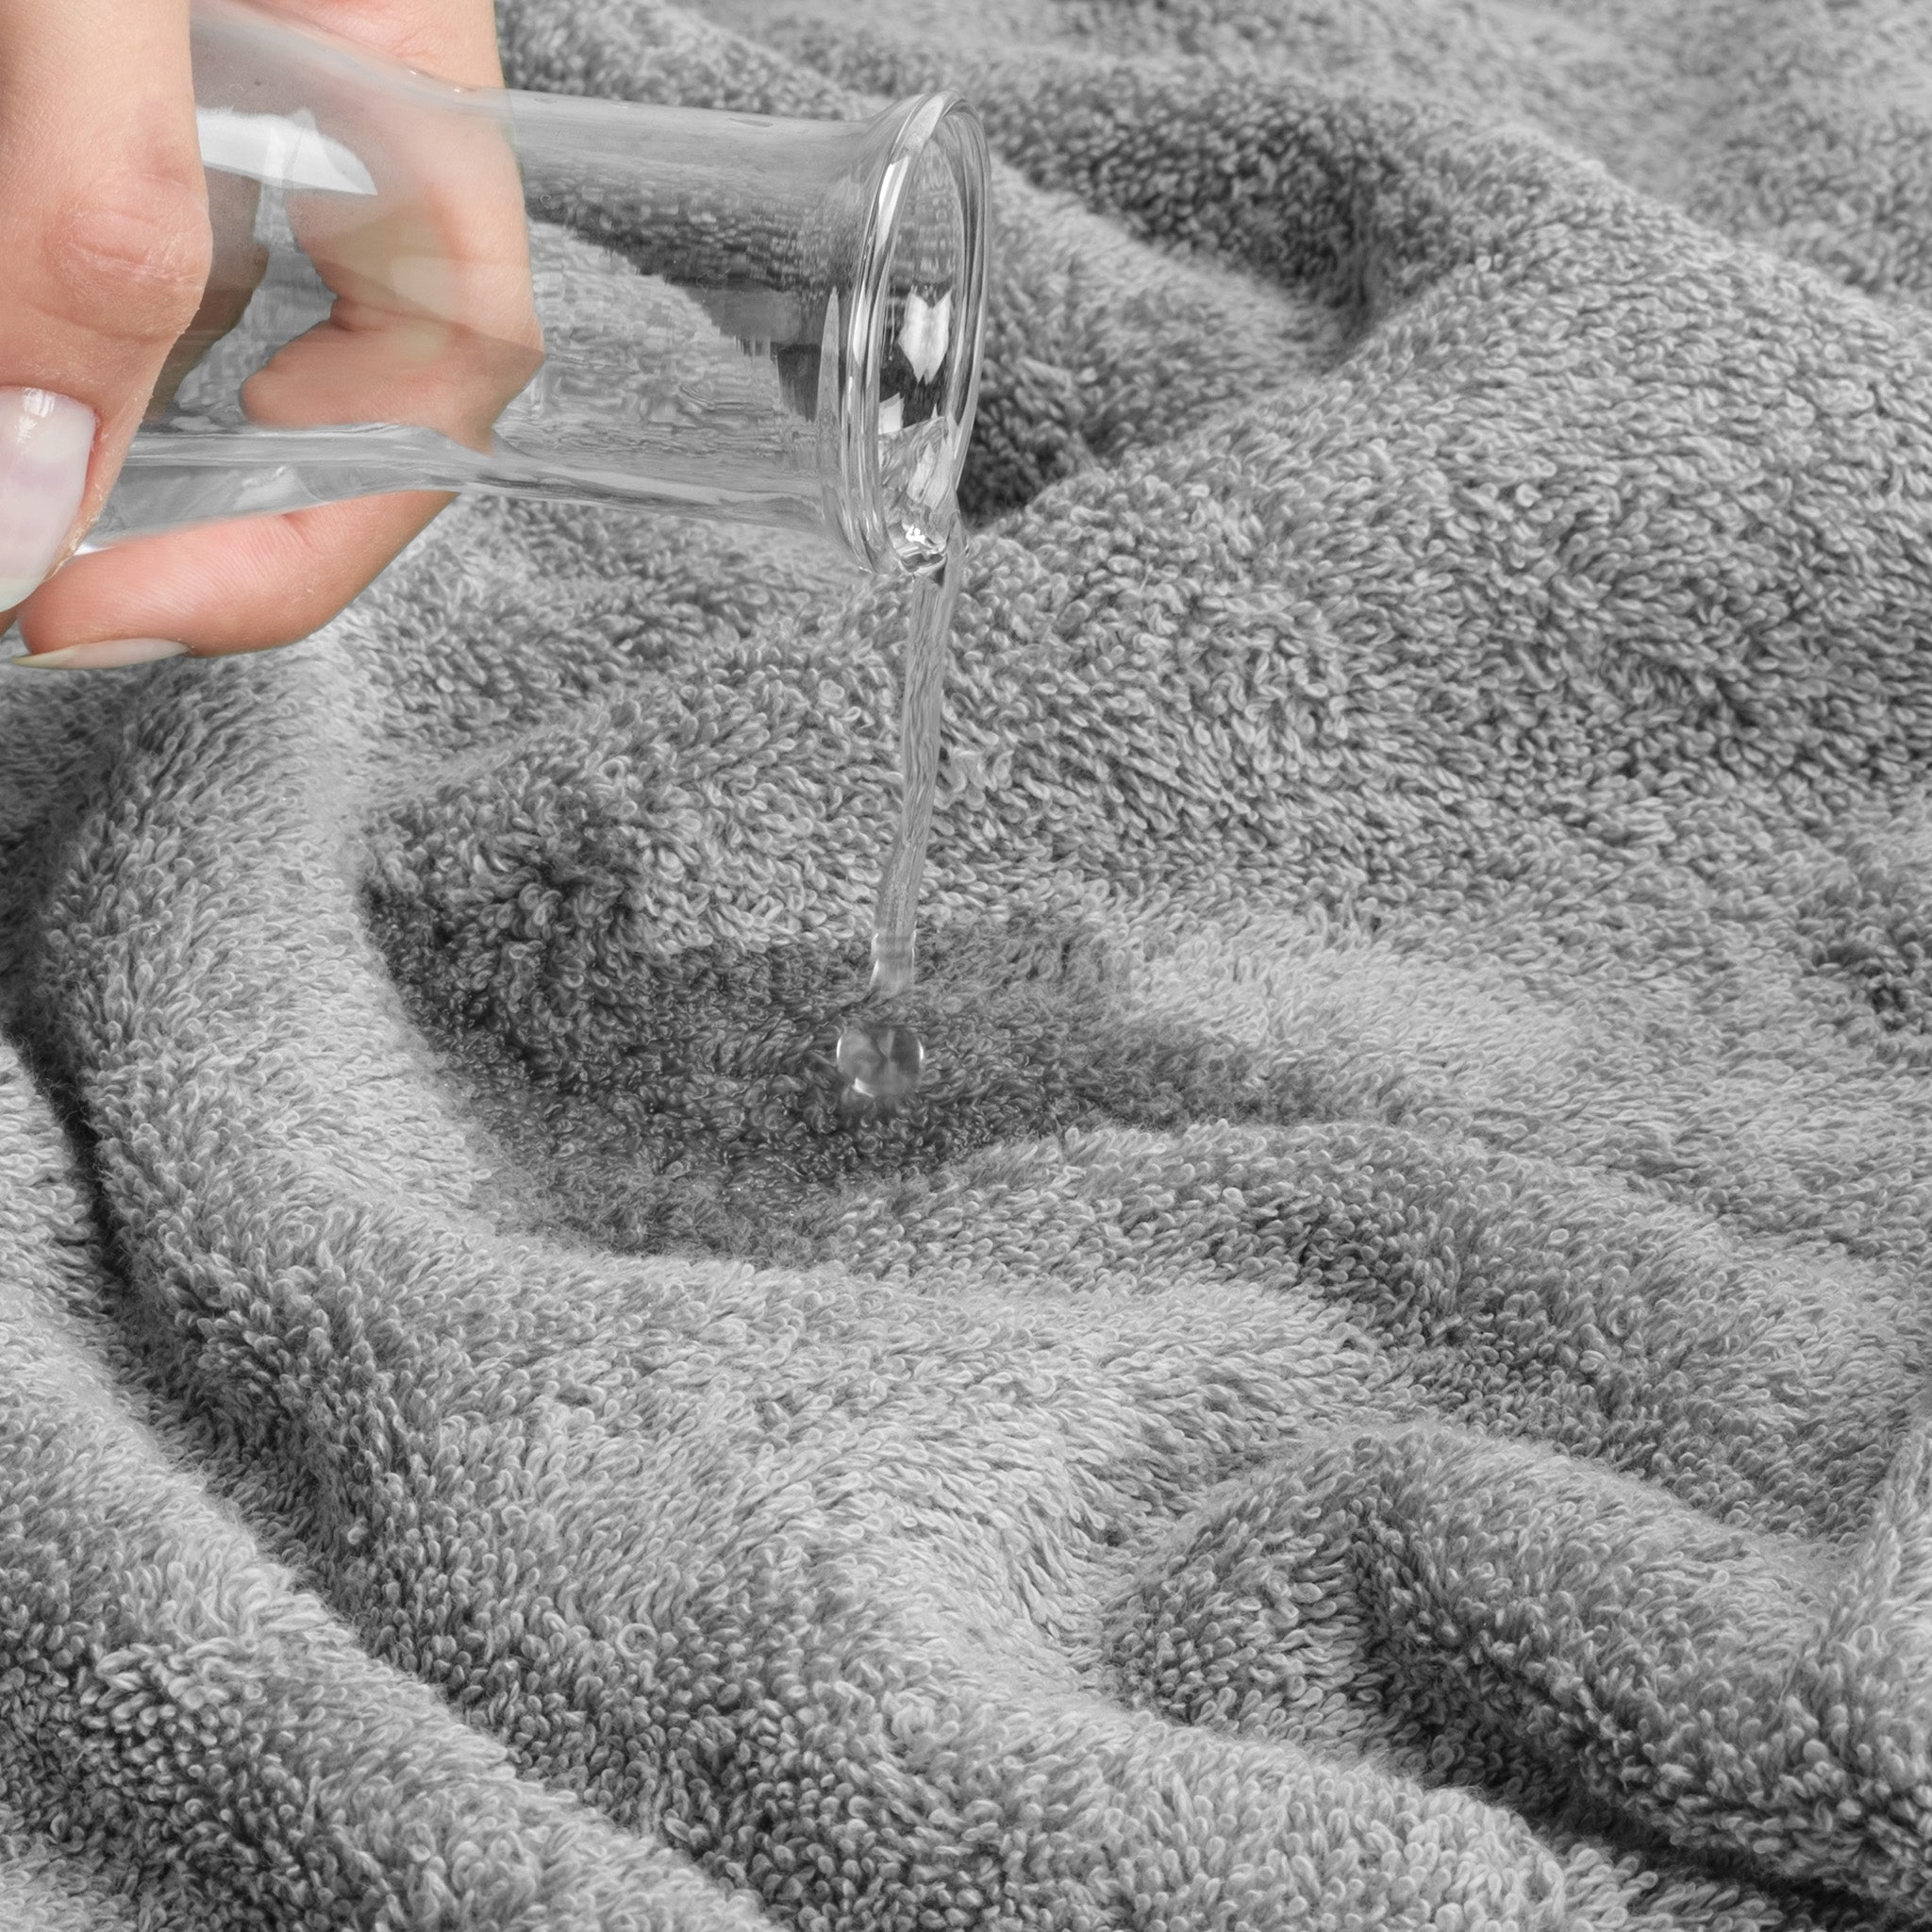 American Soft Linen Bekos 100% Cotton Turkish Towels 6 Piece Bath Towel Set -rockridge-gray-06